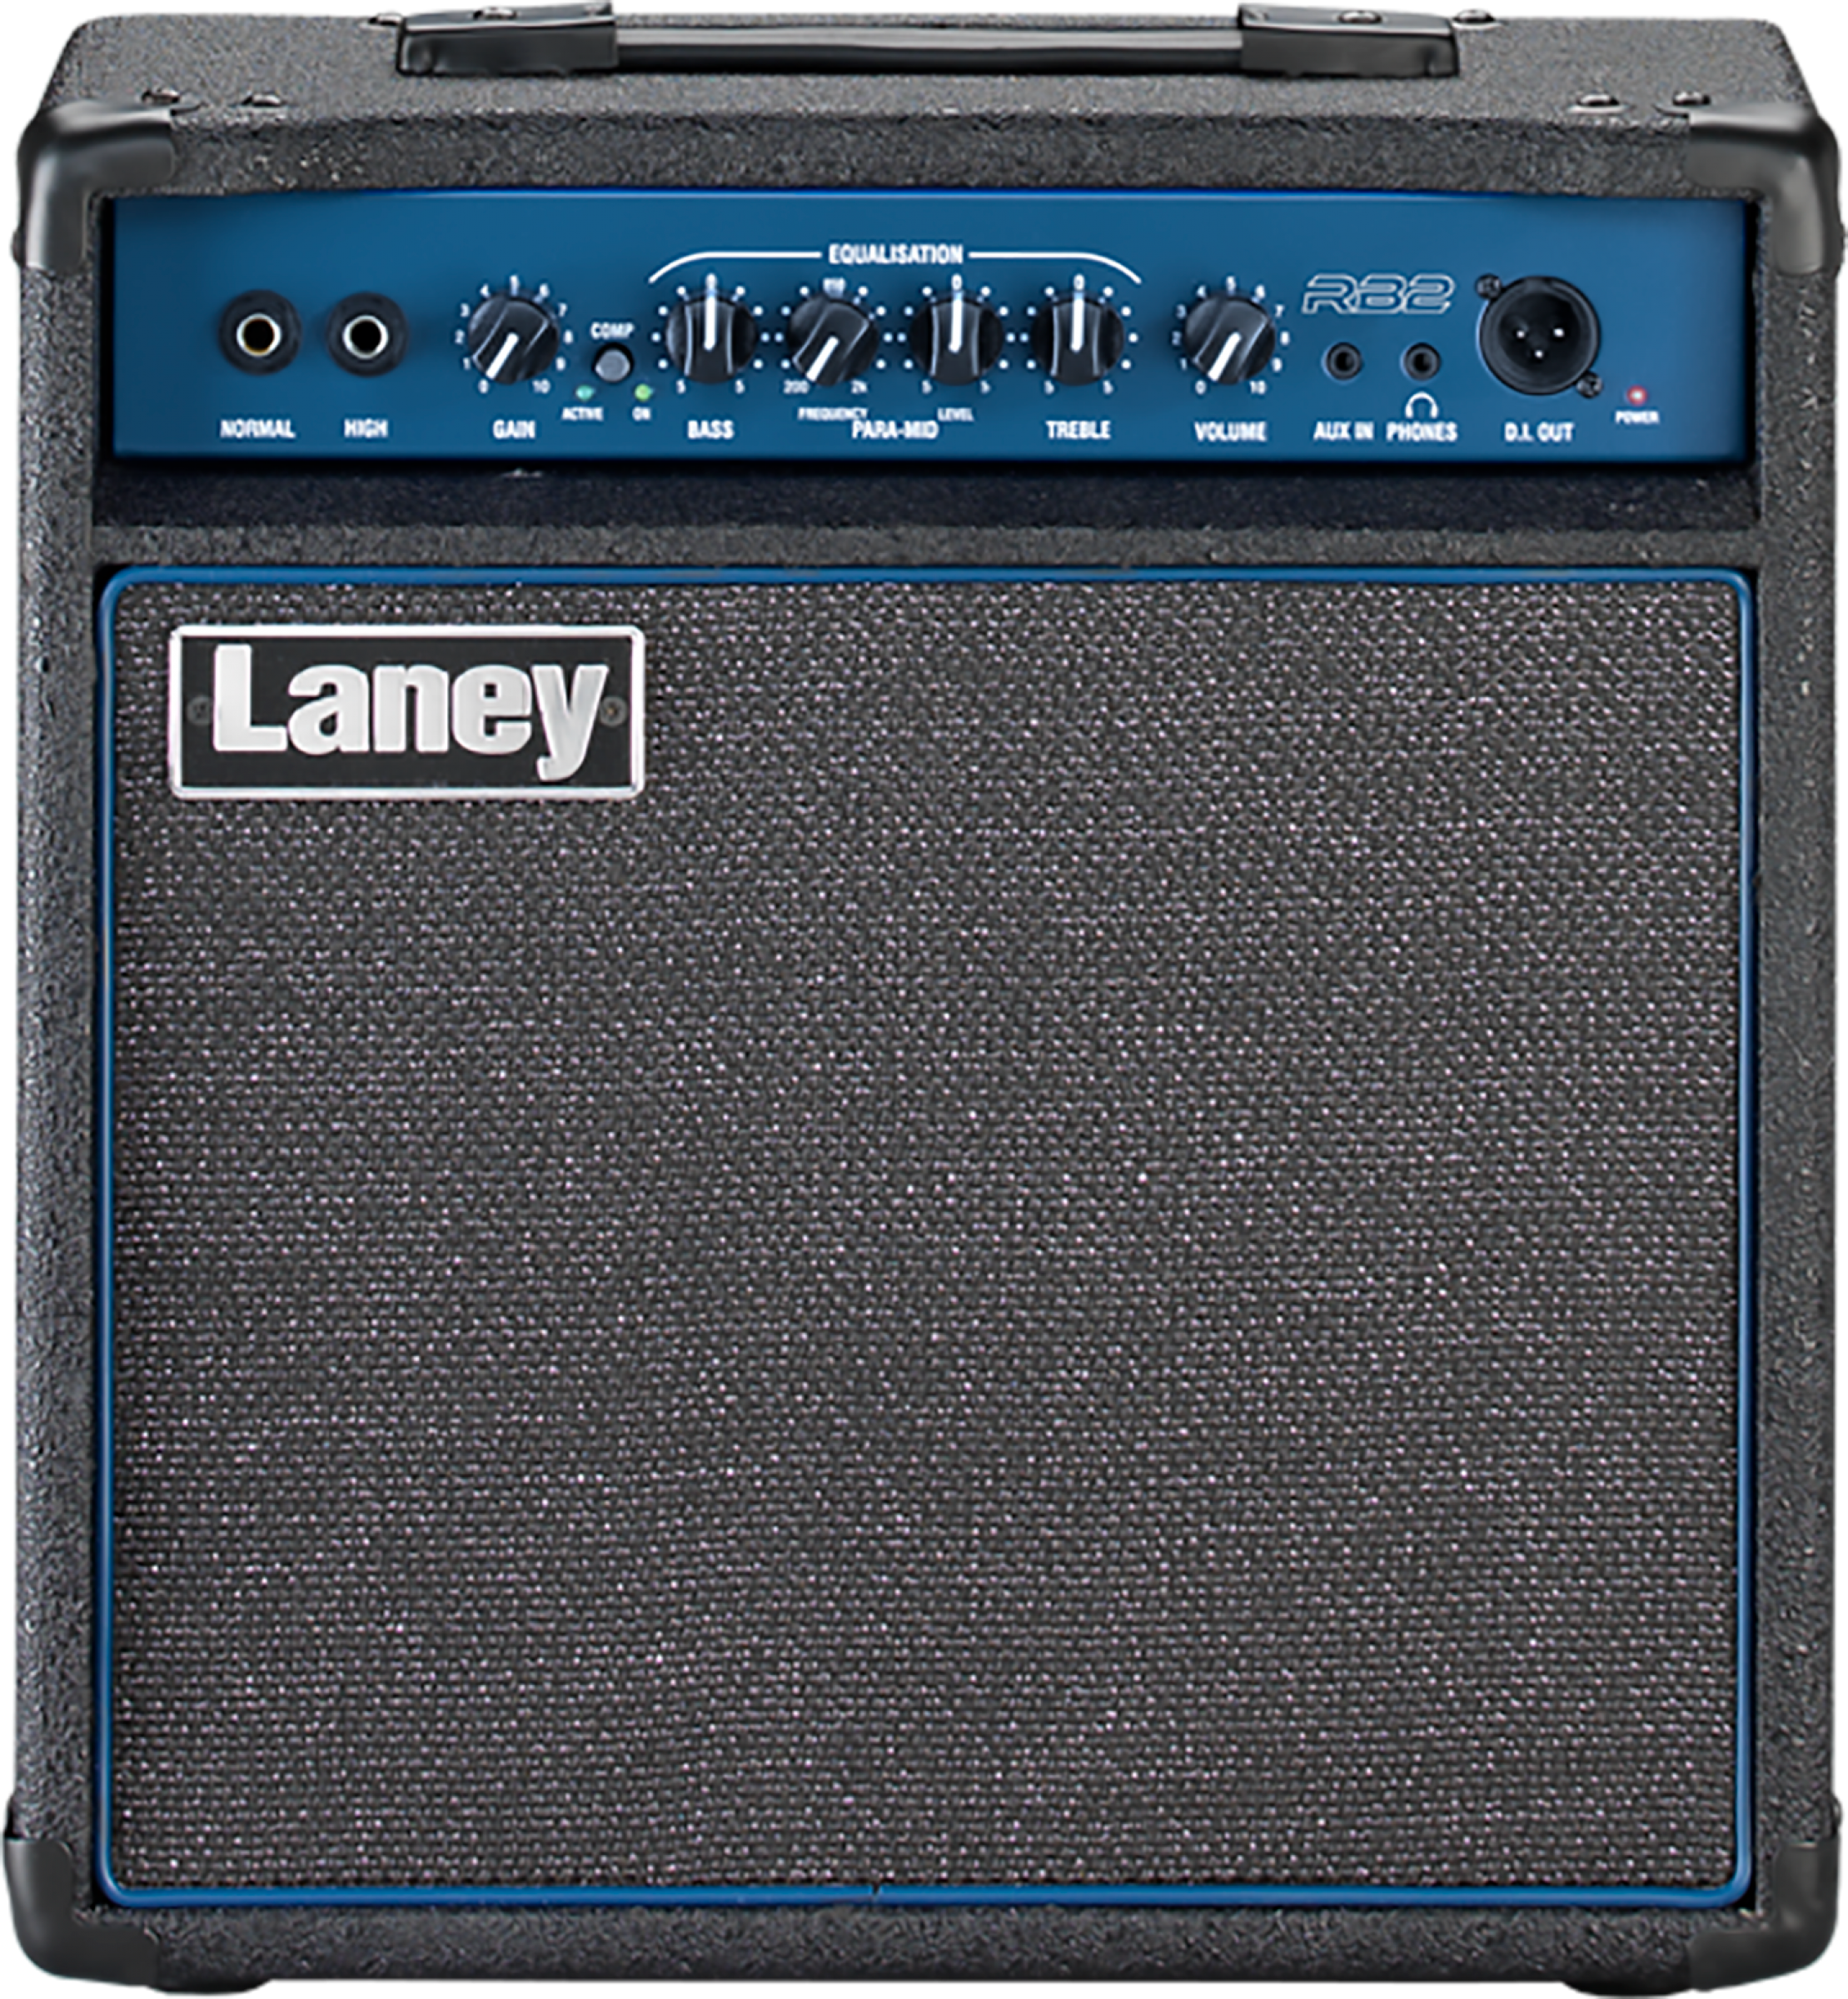 Laney Rb2 30w 1x10 - Combo amplificador para bajo - Main picture